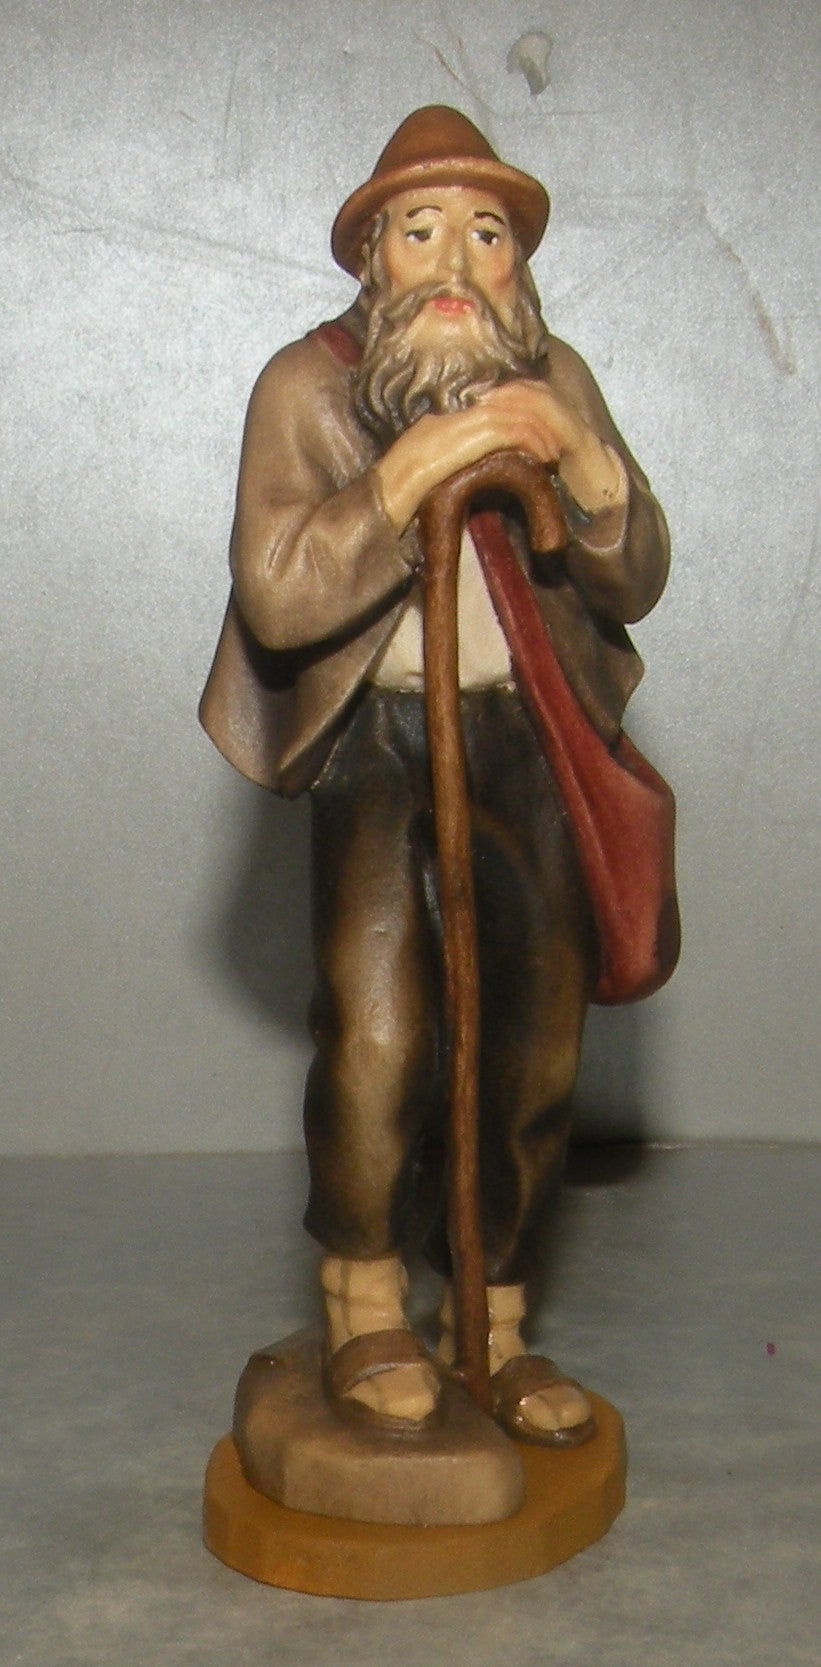 Shepherd with walking stick, Rustic